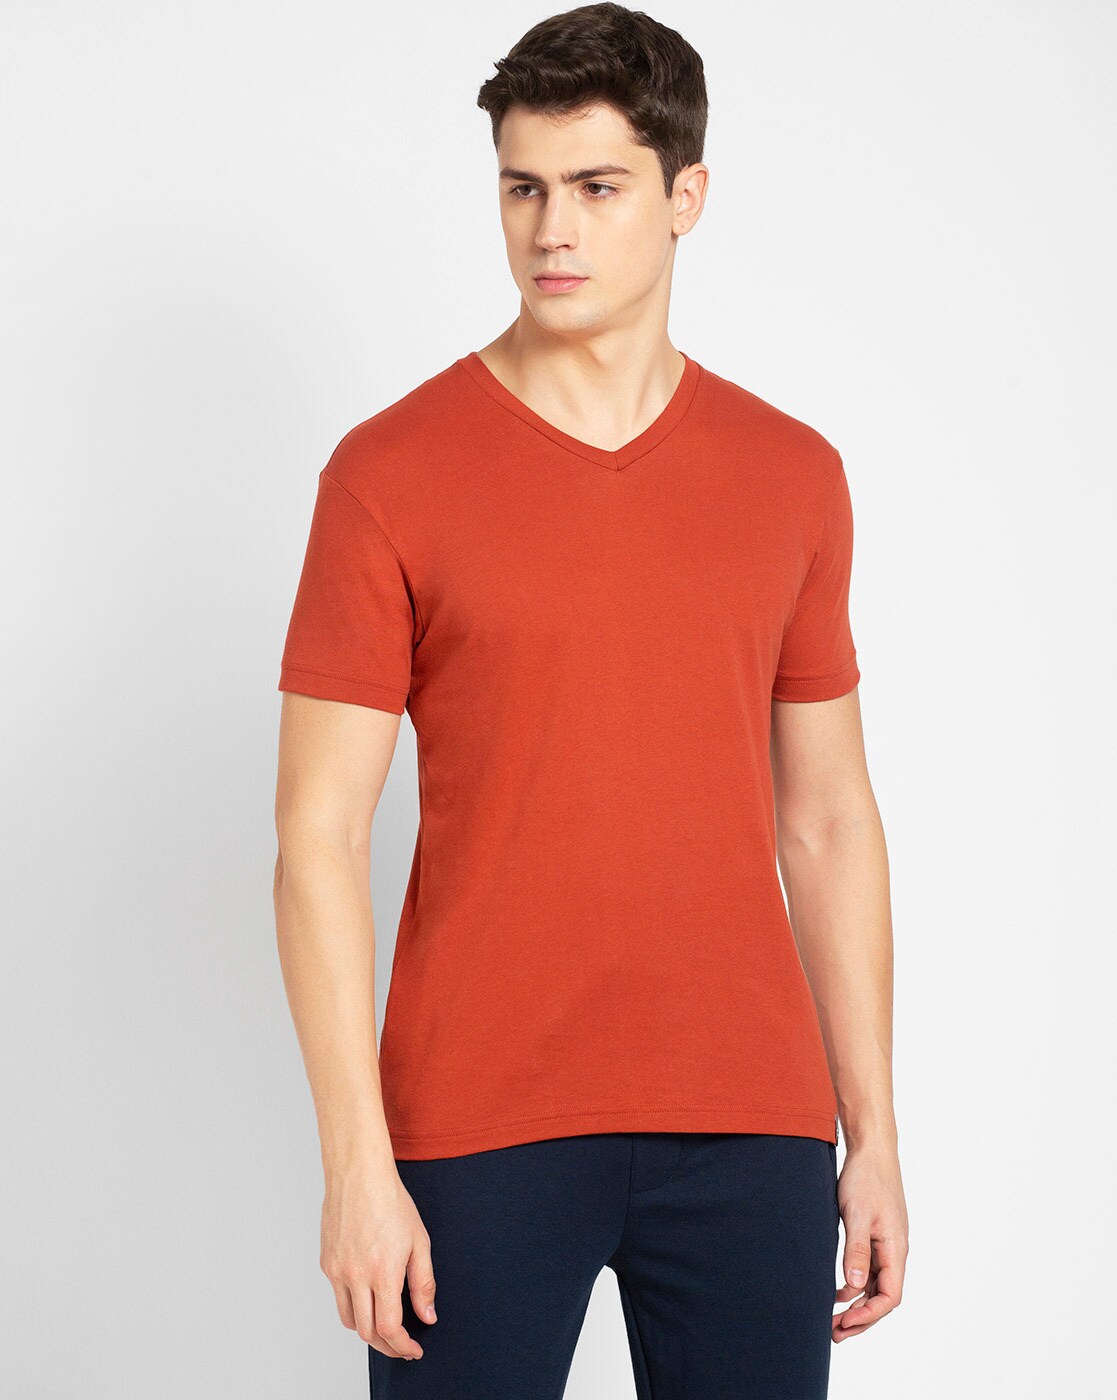 Buy Rust Tshirts for Men by Online | Ajio.com